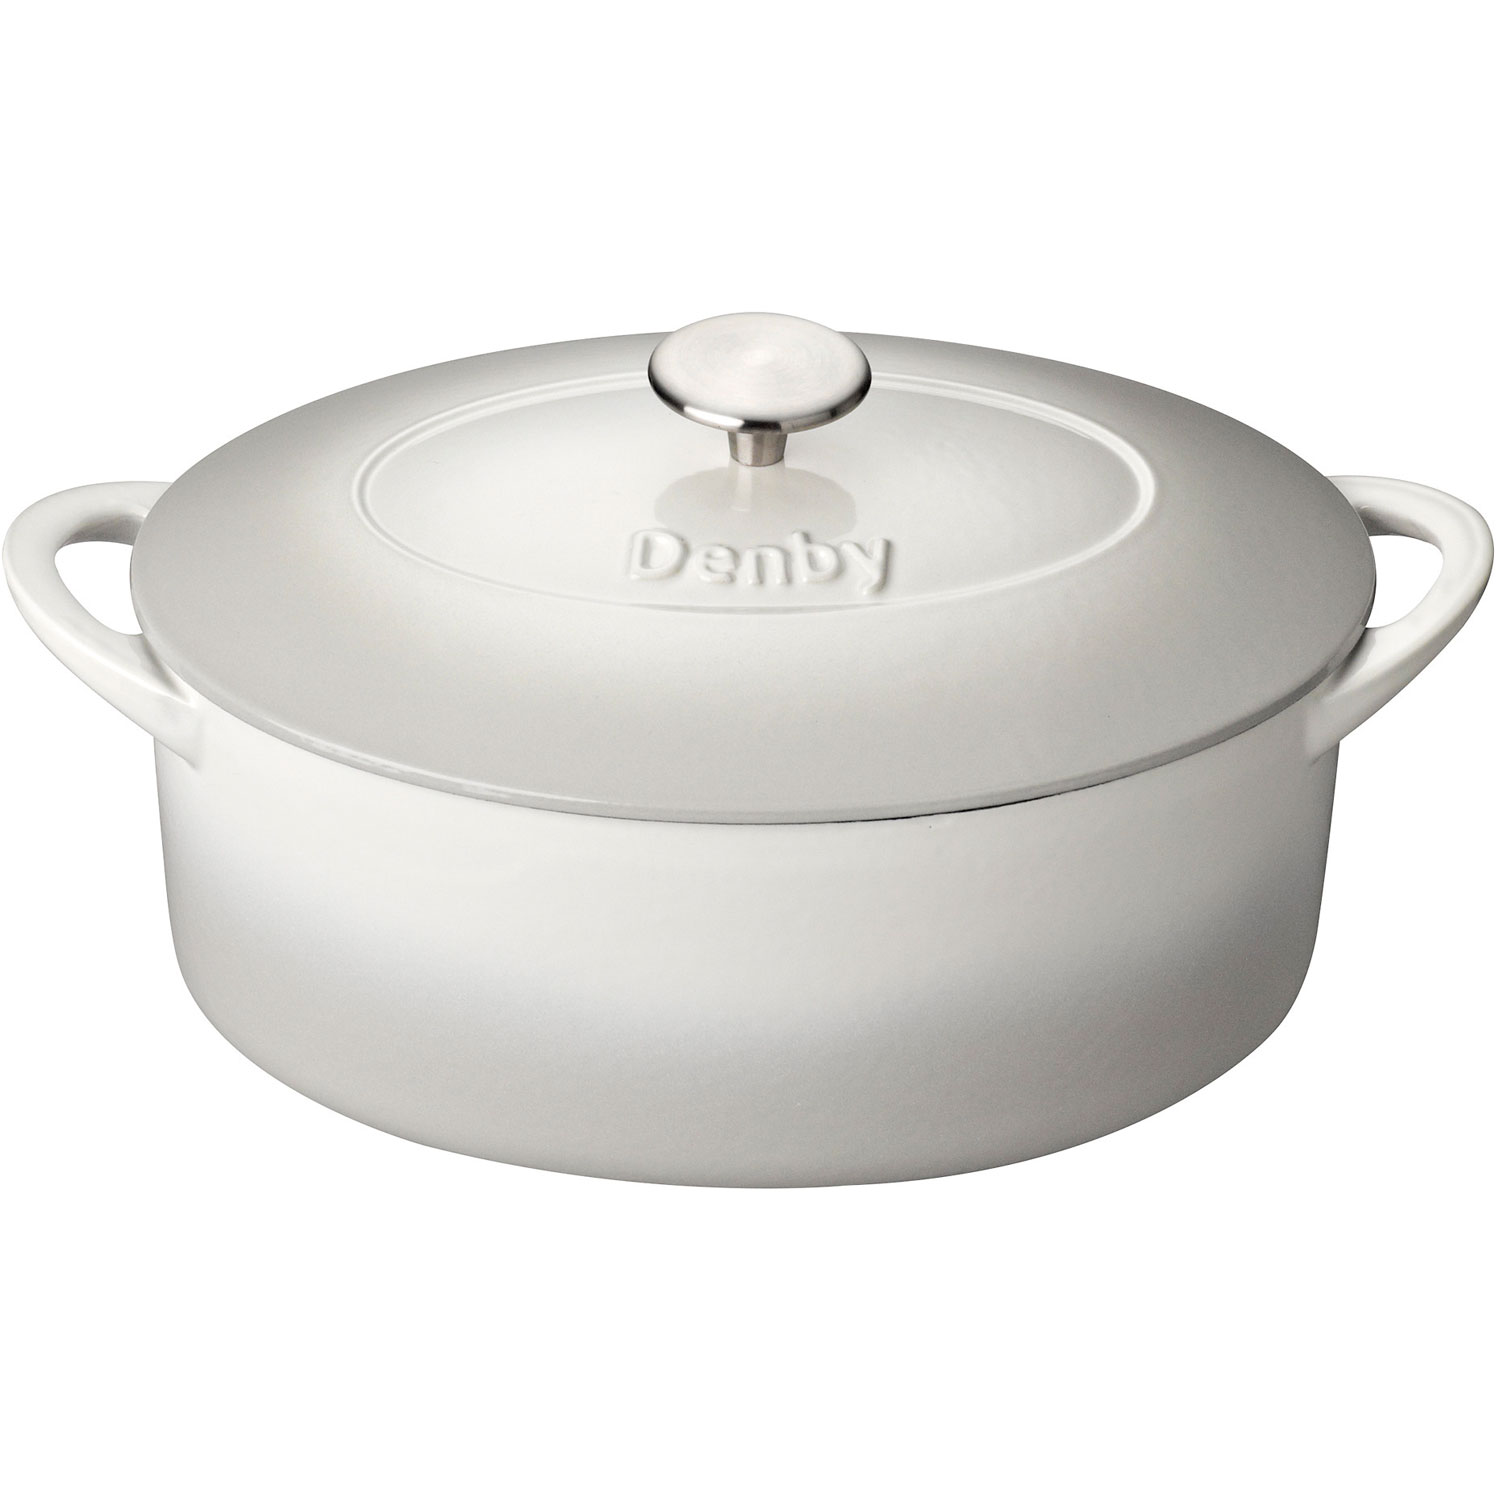 https://api-prod.royaldesign.se/api/products/image/2/denby-cast-iron-28cm-oval-casserole-10